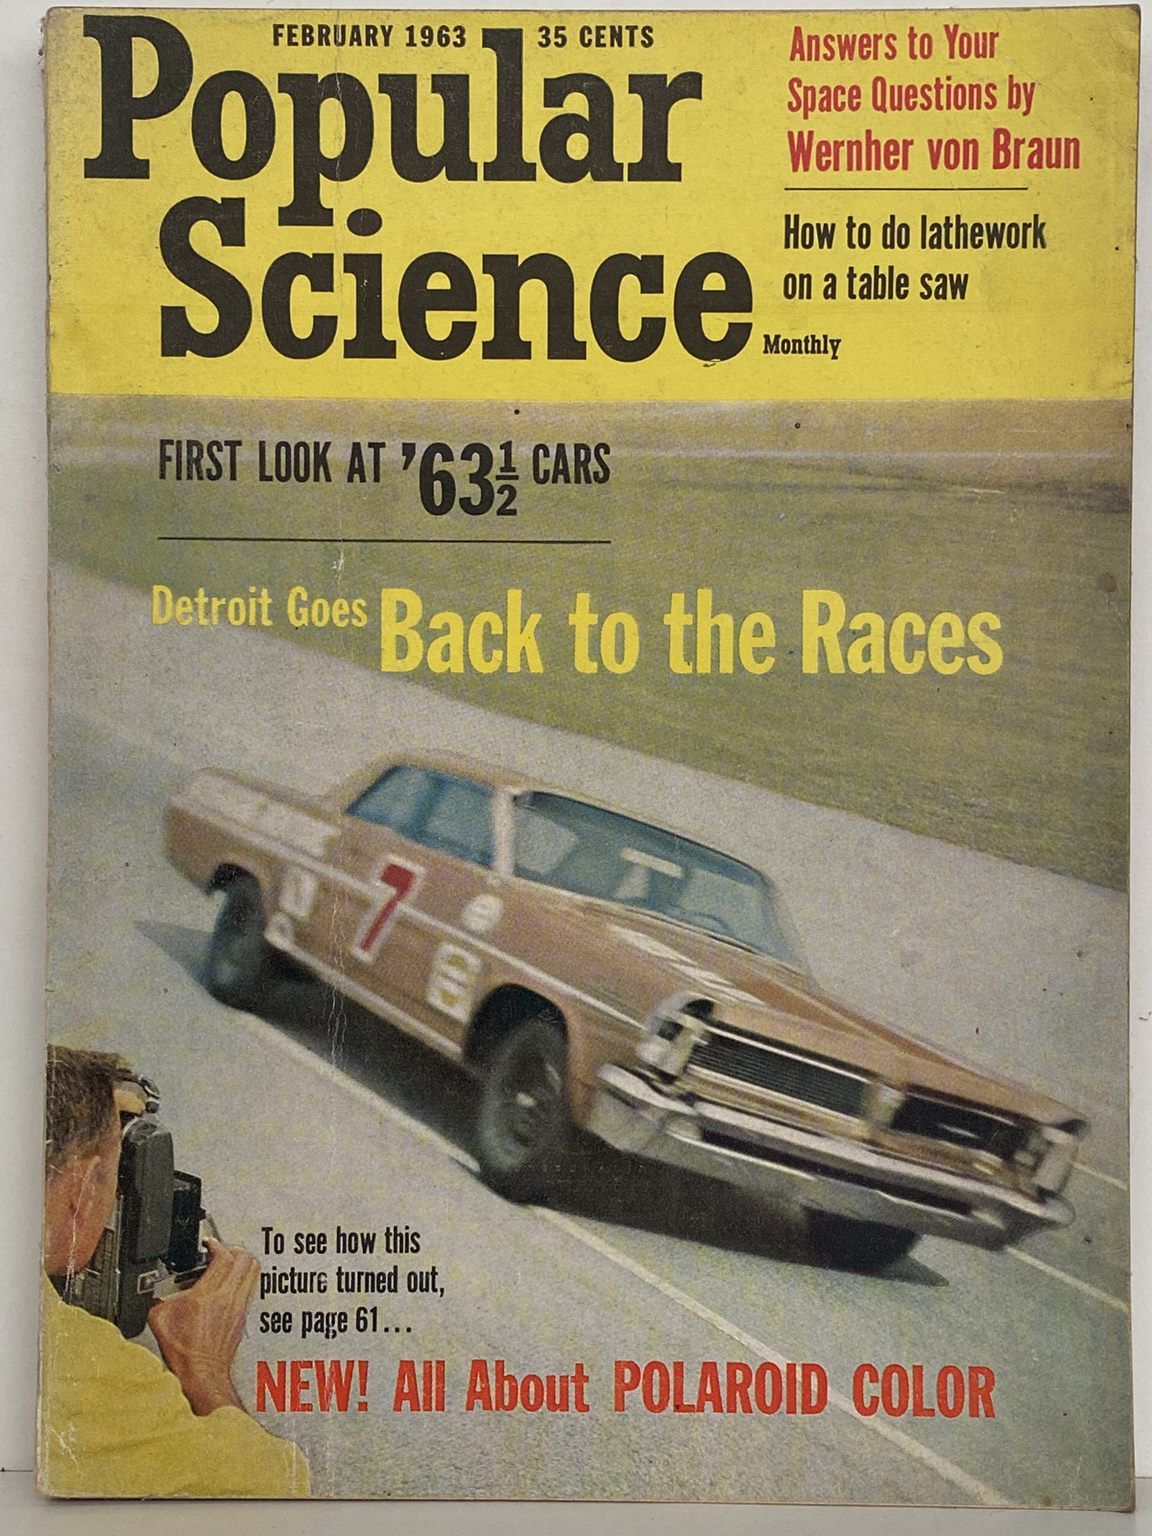 VINTAGE MAGAZINE: Popular Science, Vol. 182, No. 2 - February 1963